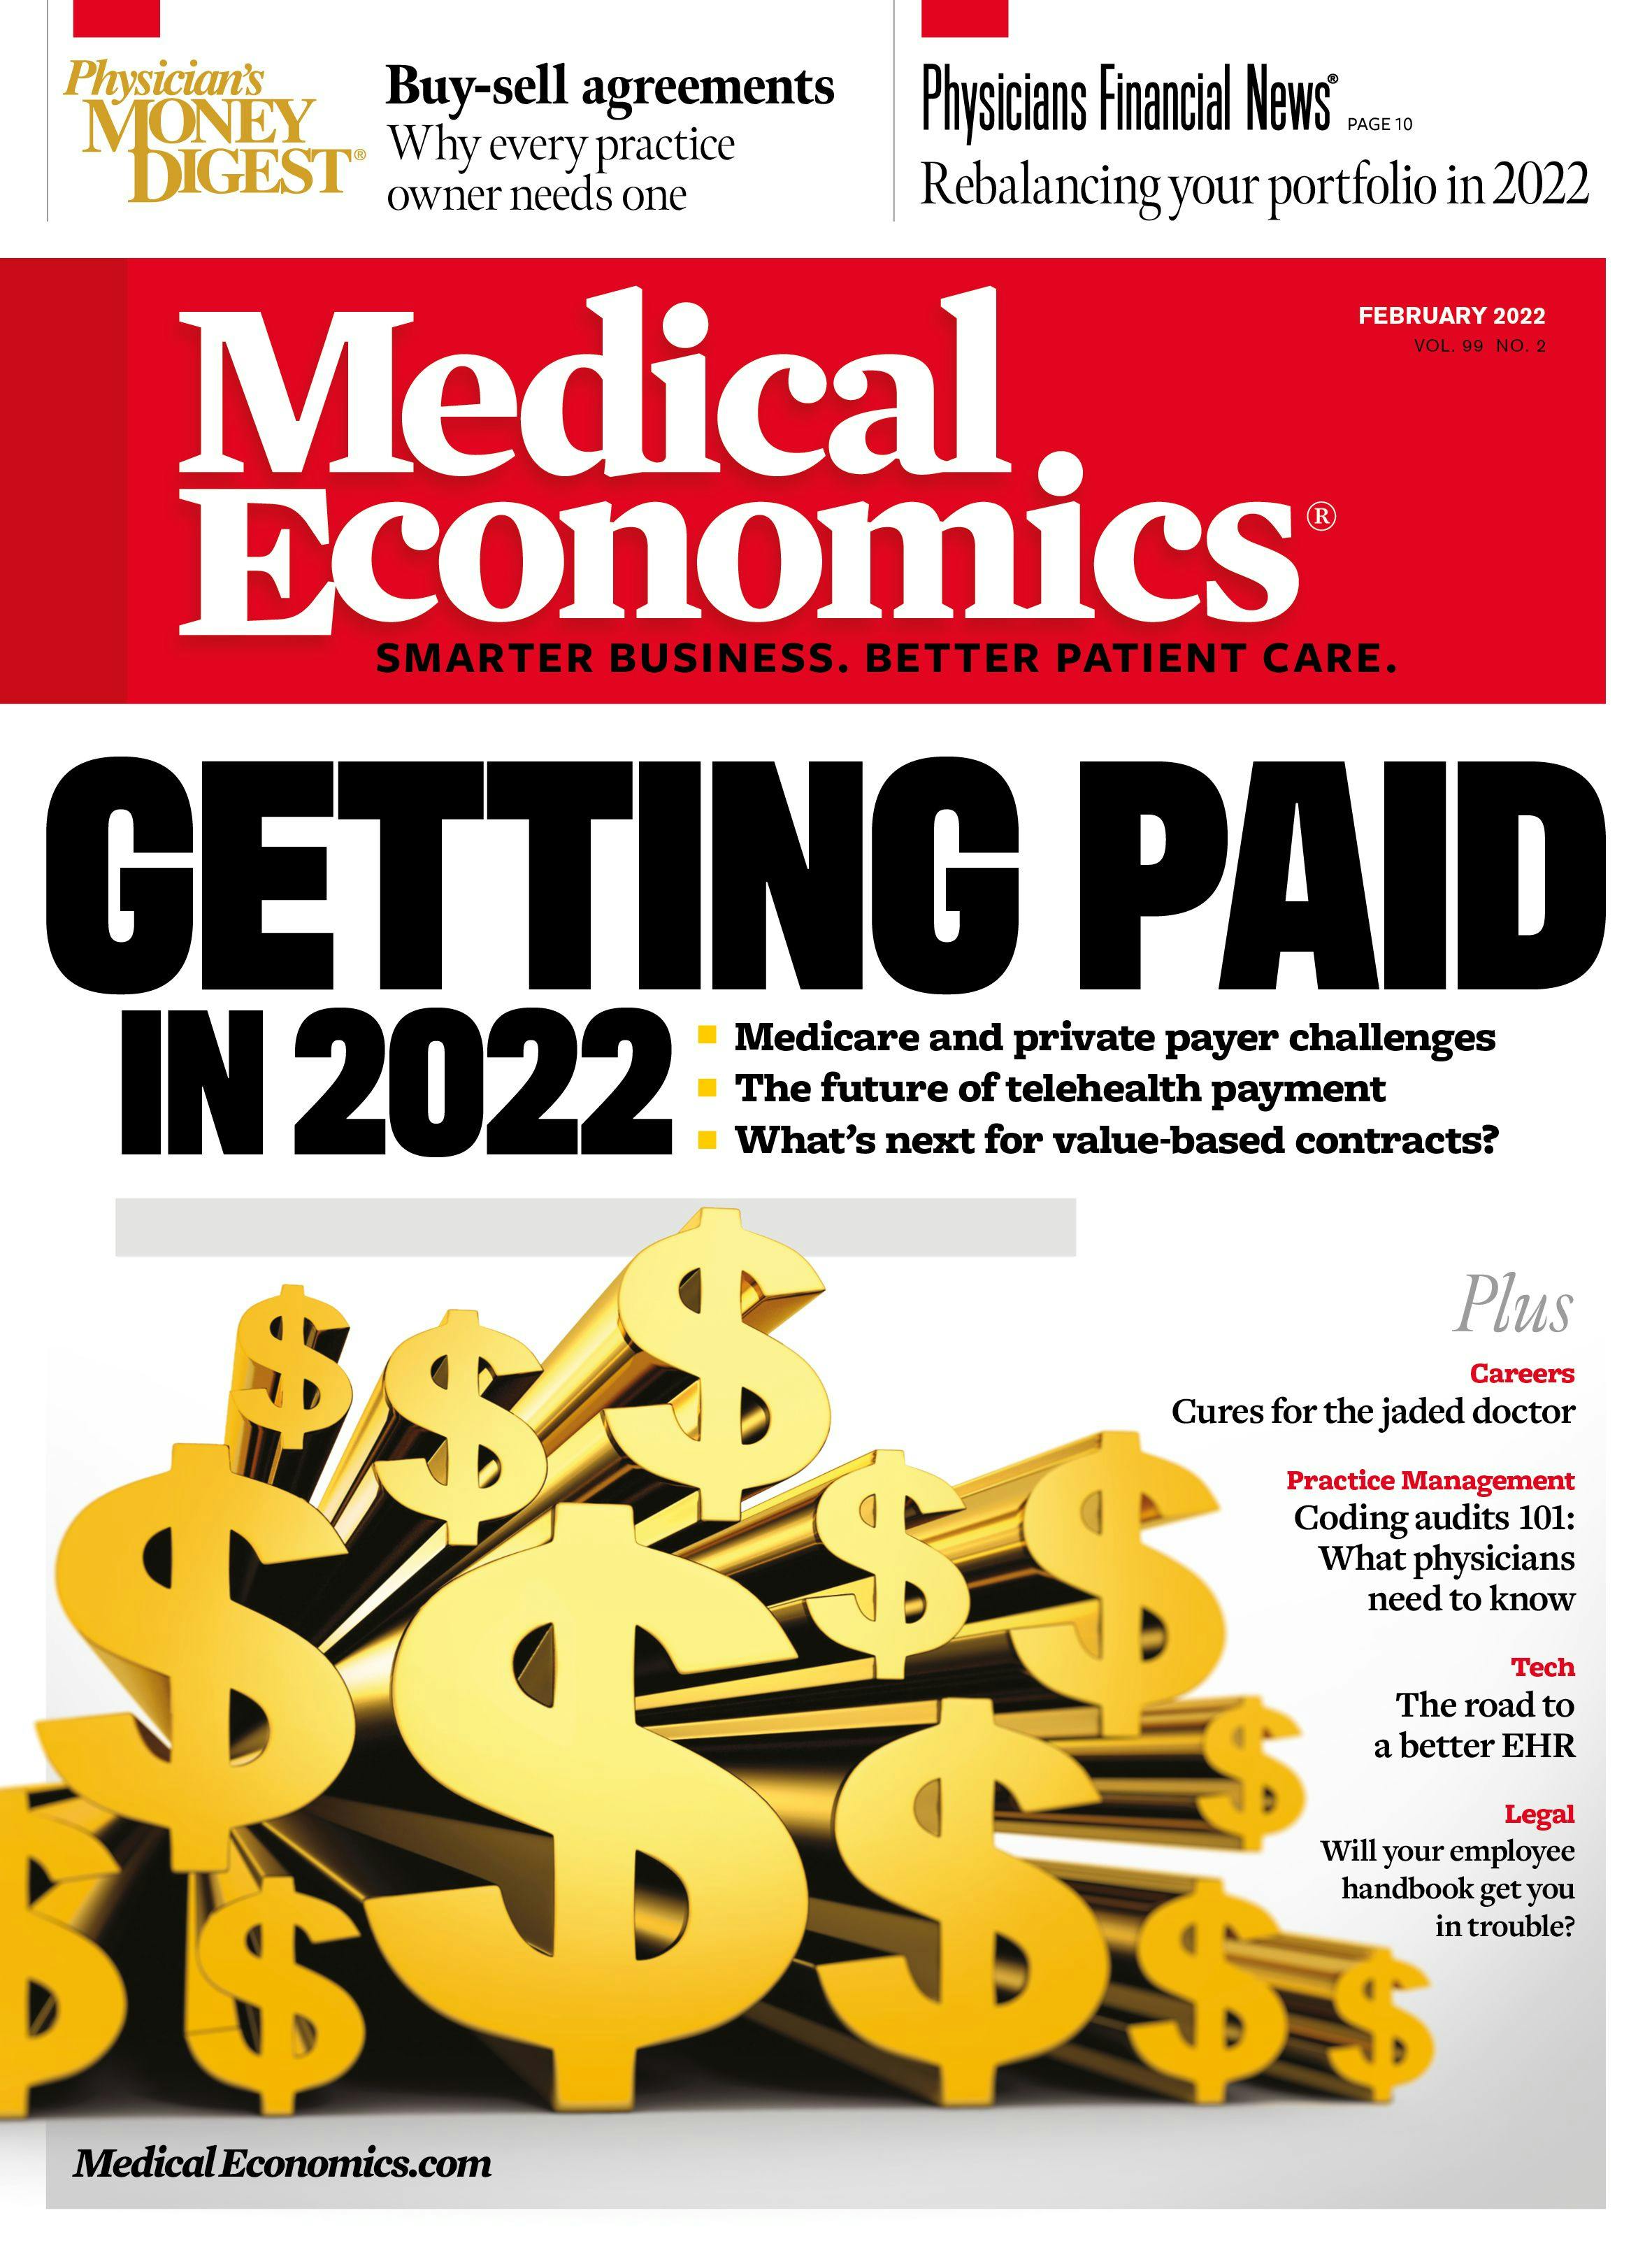 Medical Economics February 2022 issue